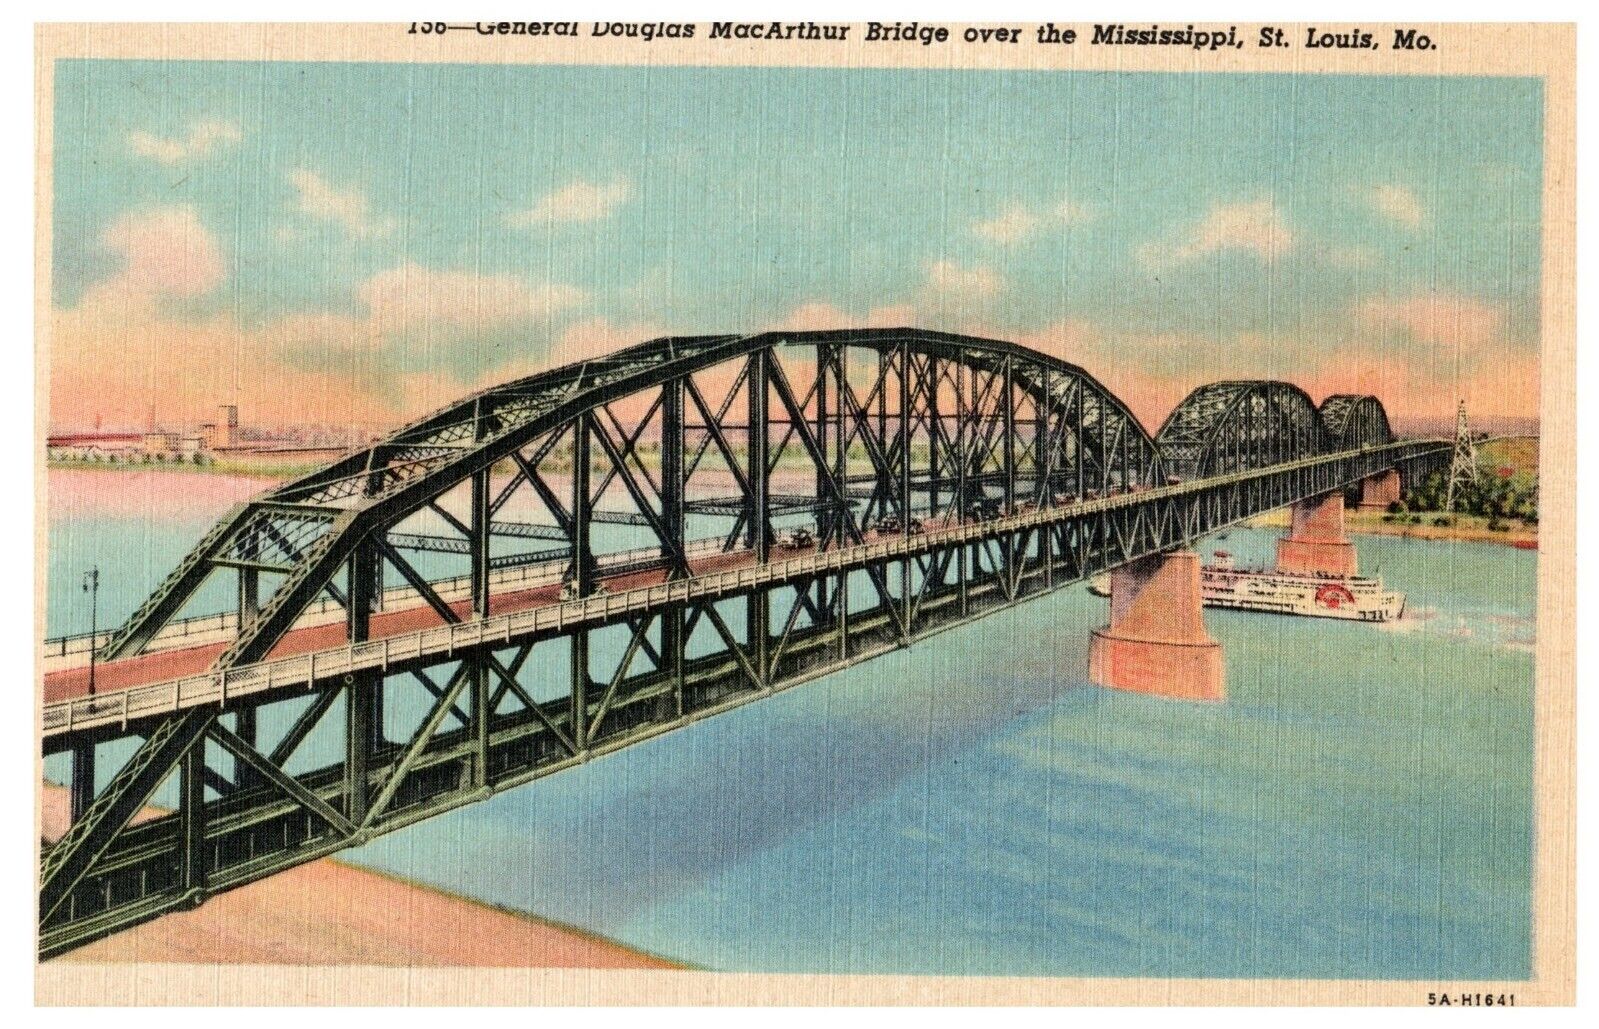 1935 General Douglas MacArthur Bridge over the Mississippi, St. Louis, Missouri 